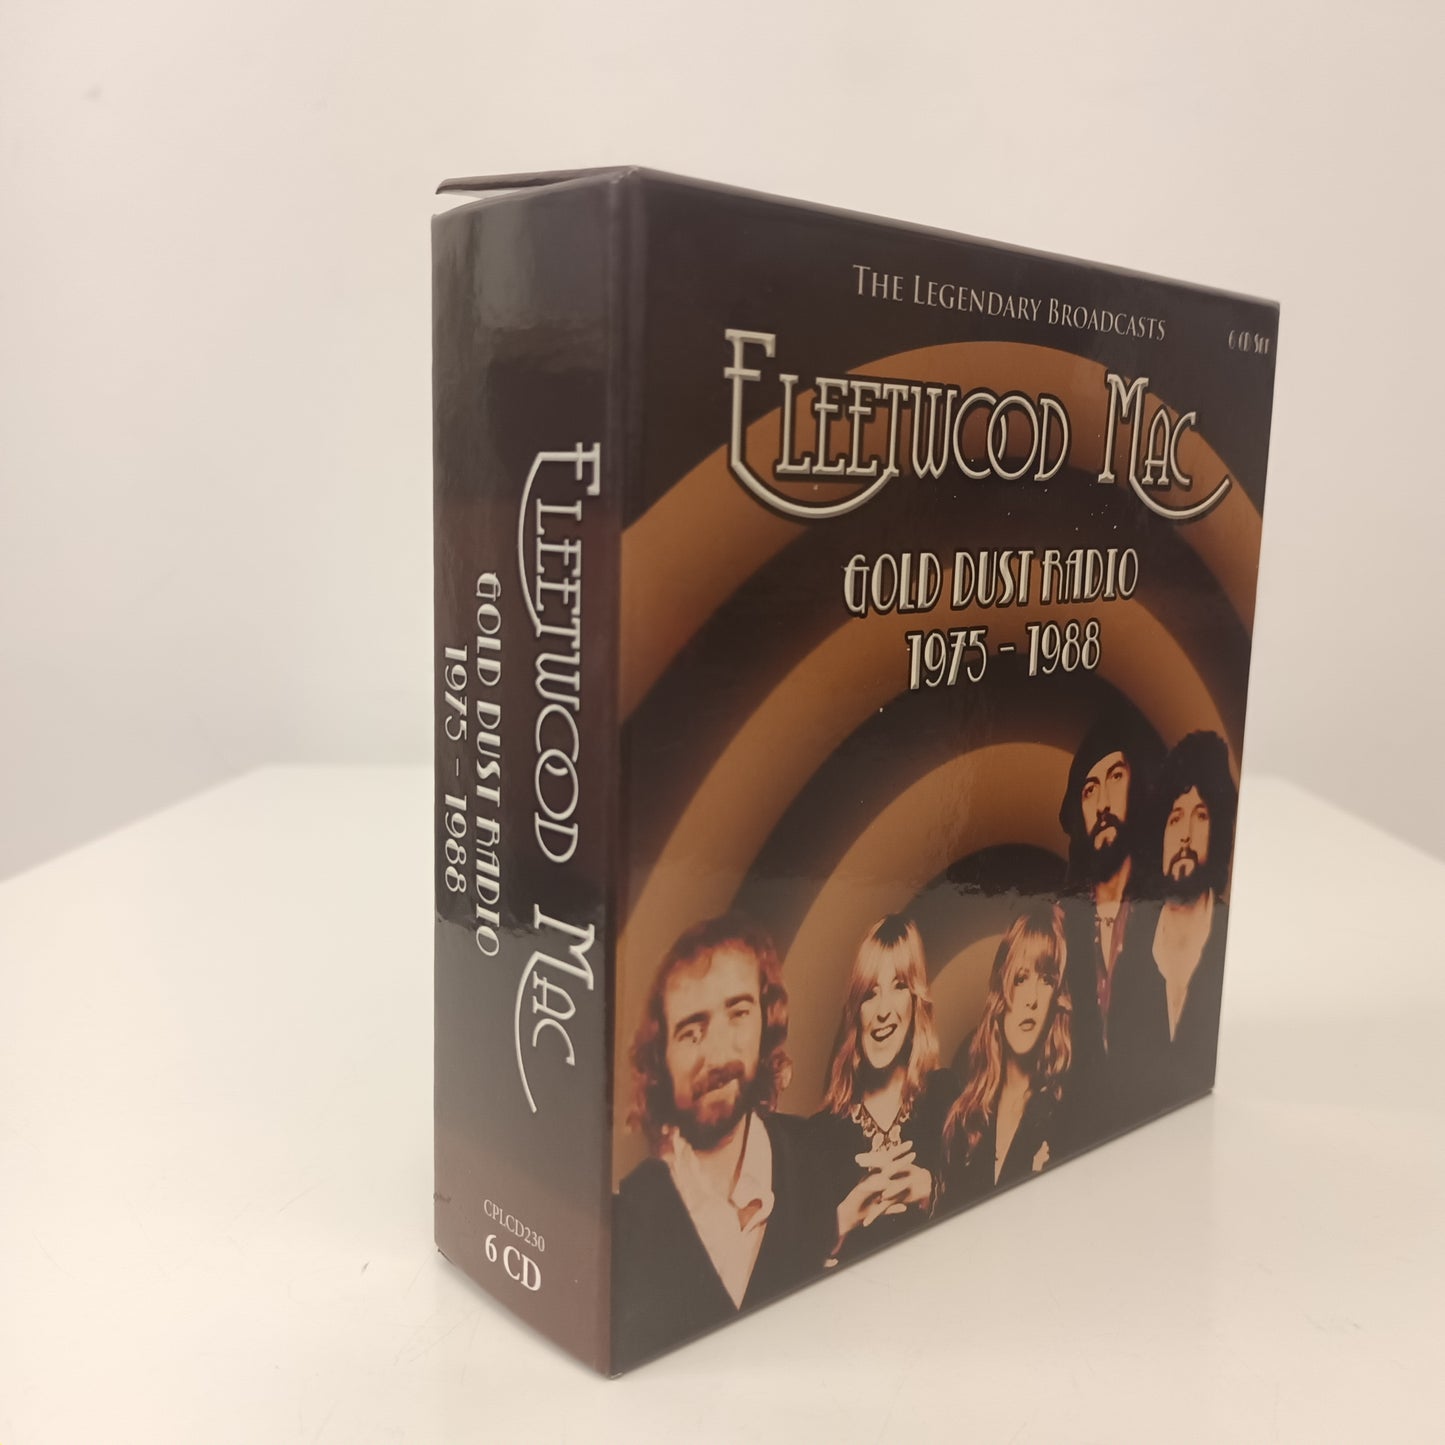 Fleetwood Mac Gold Dust Radio 1975 1988 6 CD Box Set